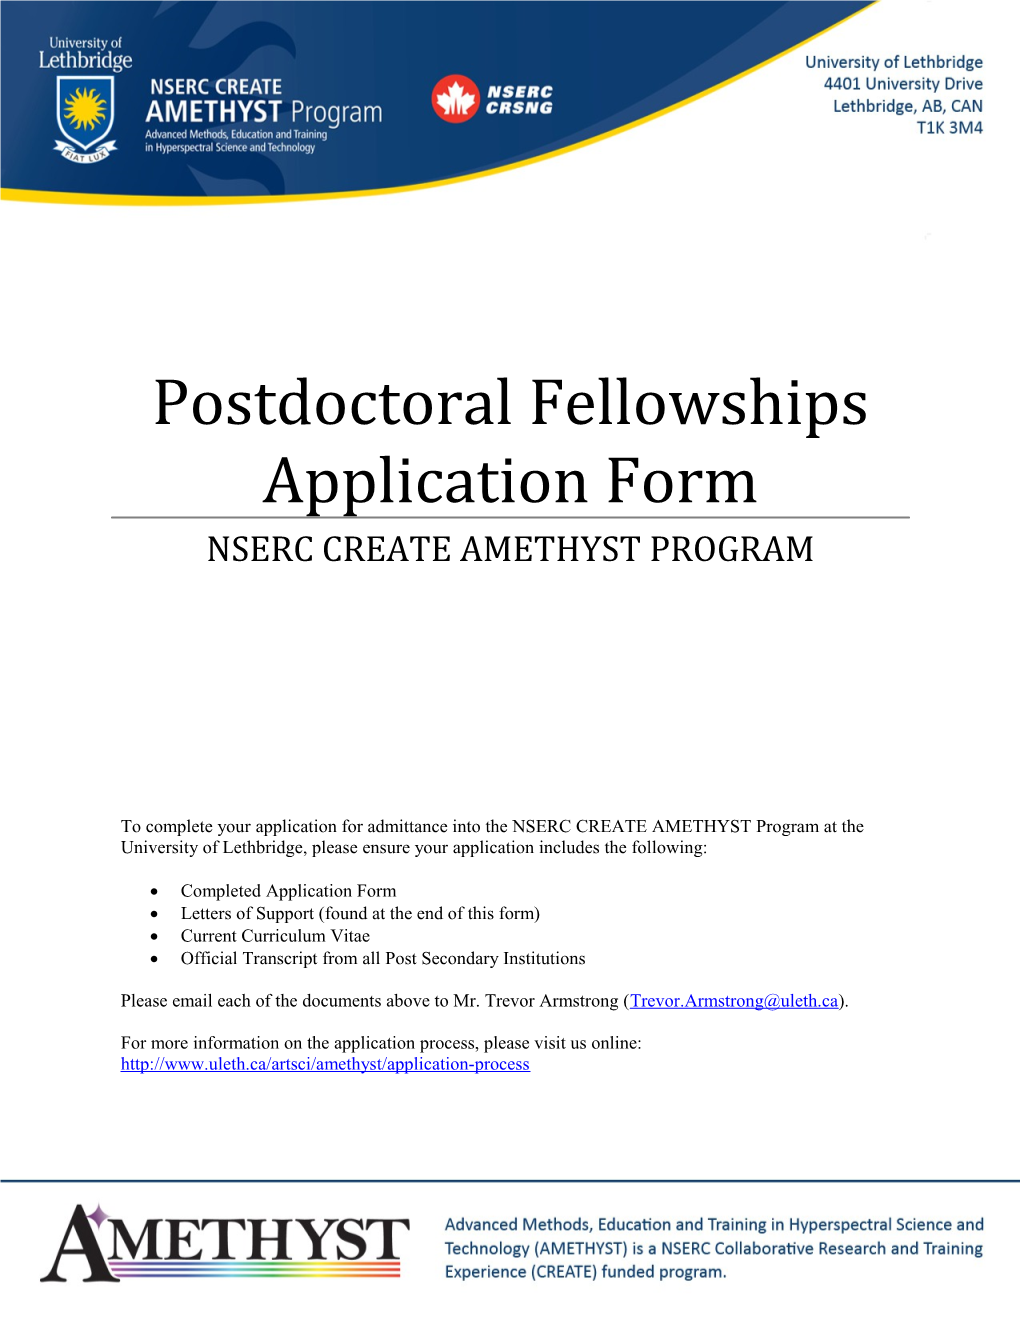 Postdoctoral Fellowships Application Form